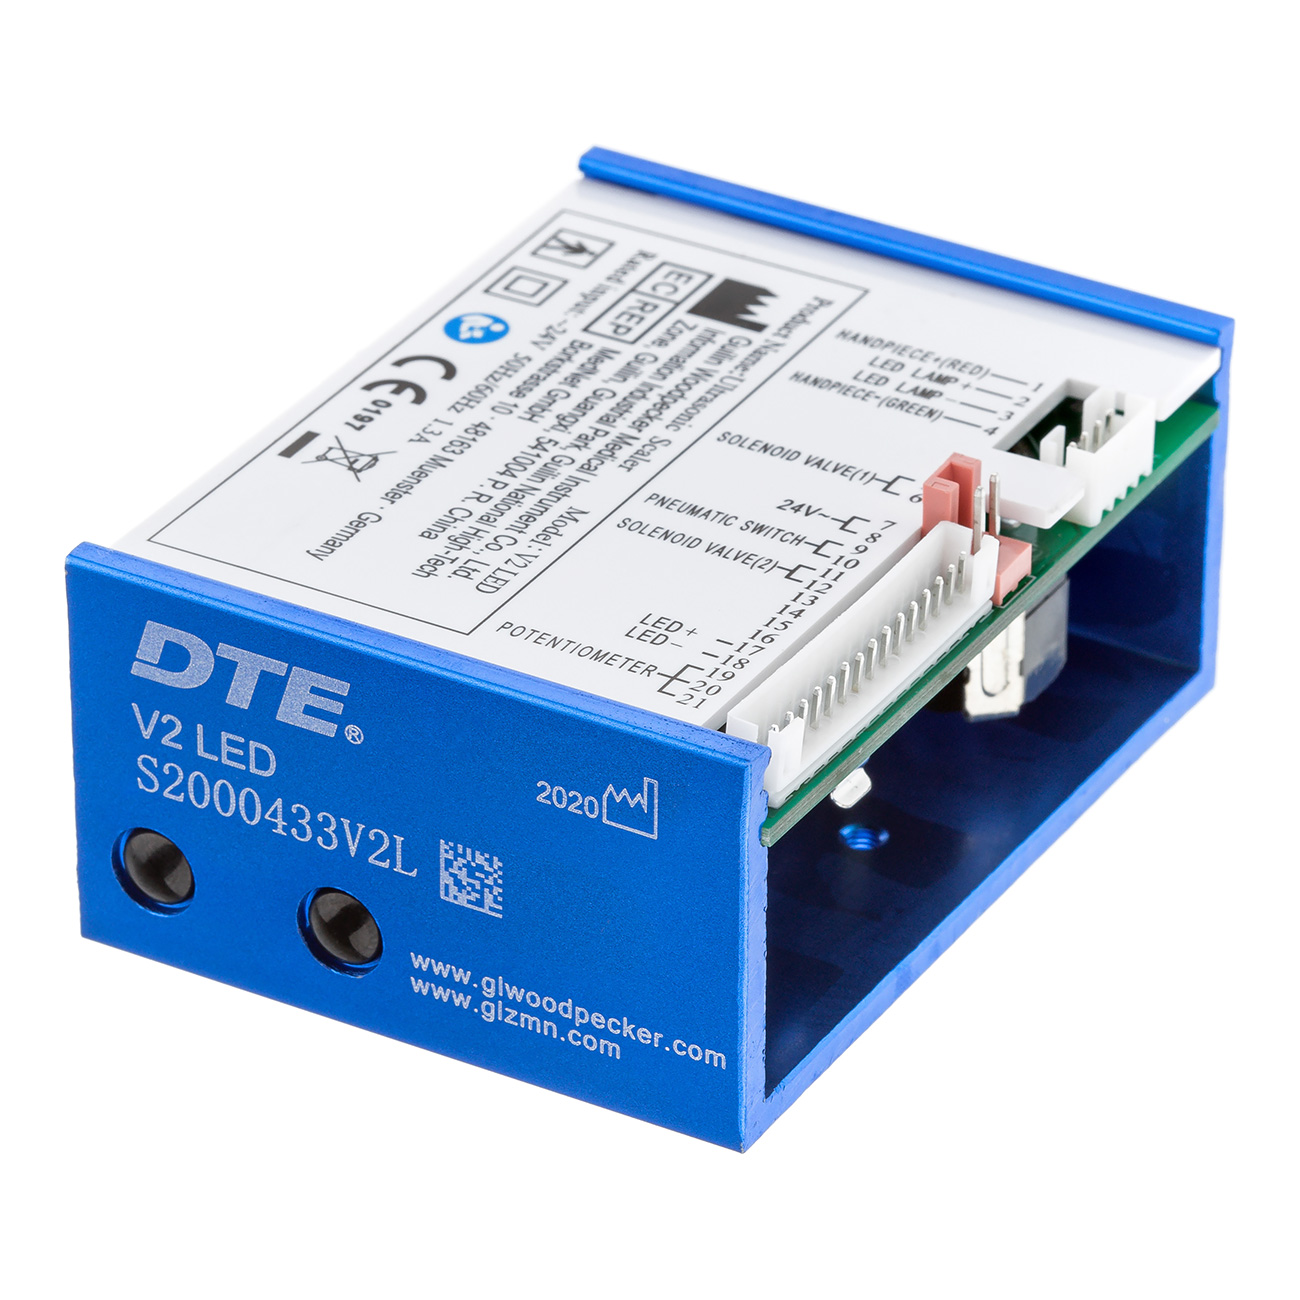   DTE-V2 LED, 5    (GD1x2, GD2, GD4, PD1)